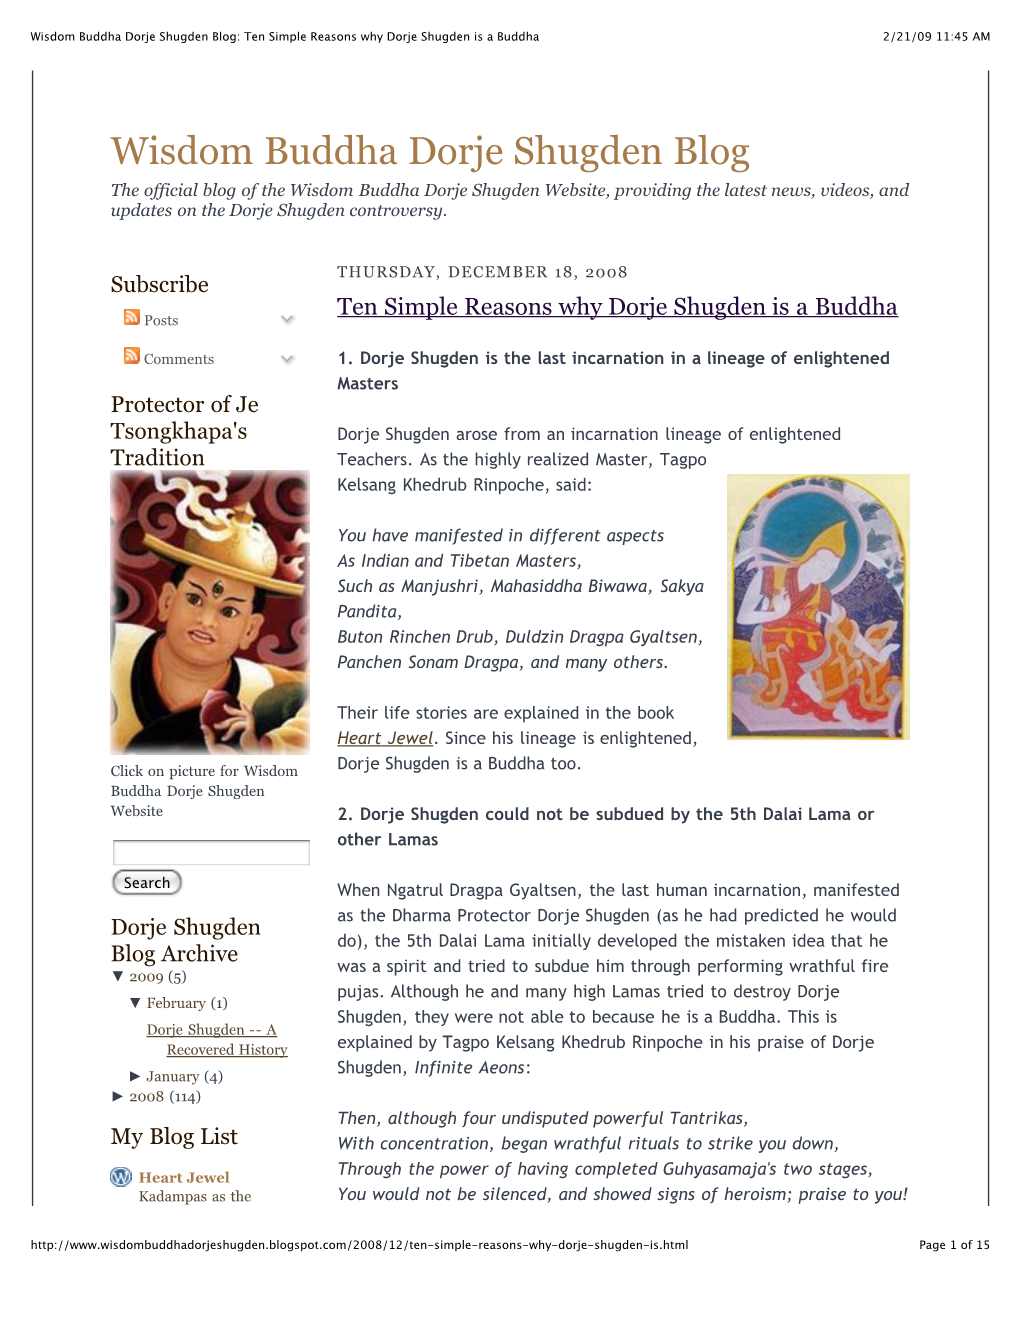 Ten Simple Reasons Why Dorje Shugden Is a Buddha 2/21/09 11:45 AM